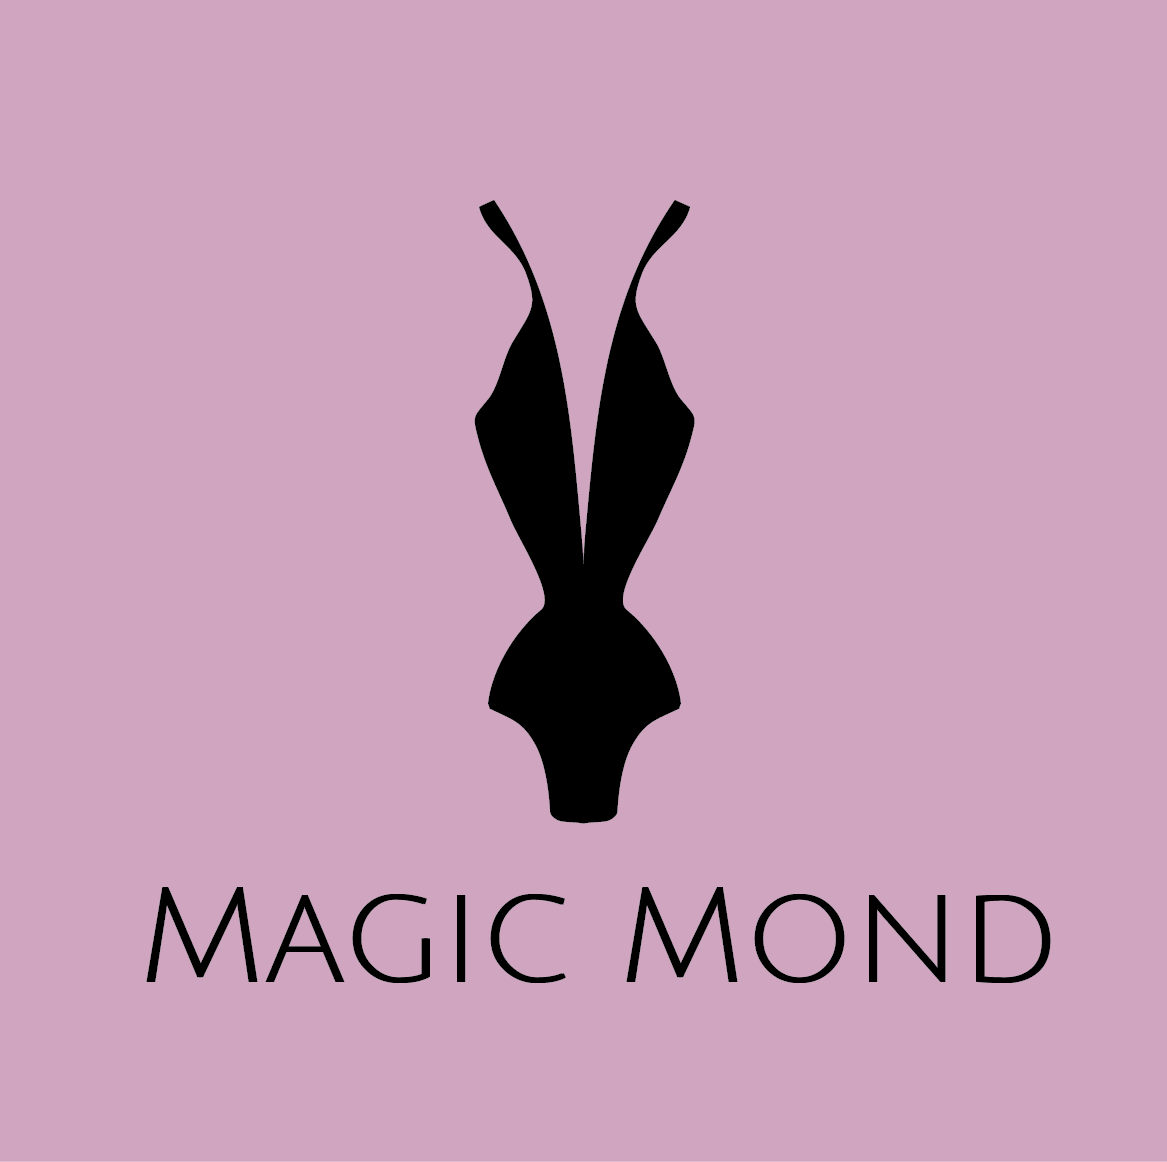 Magicmondchile – Magicmond Chile